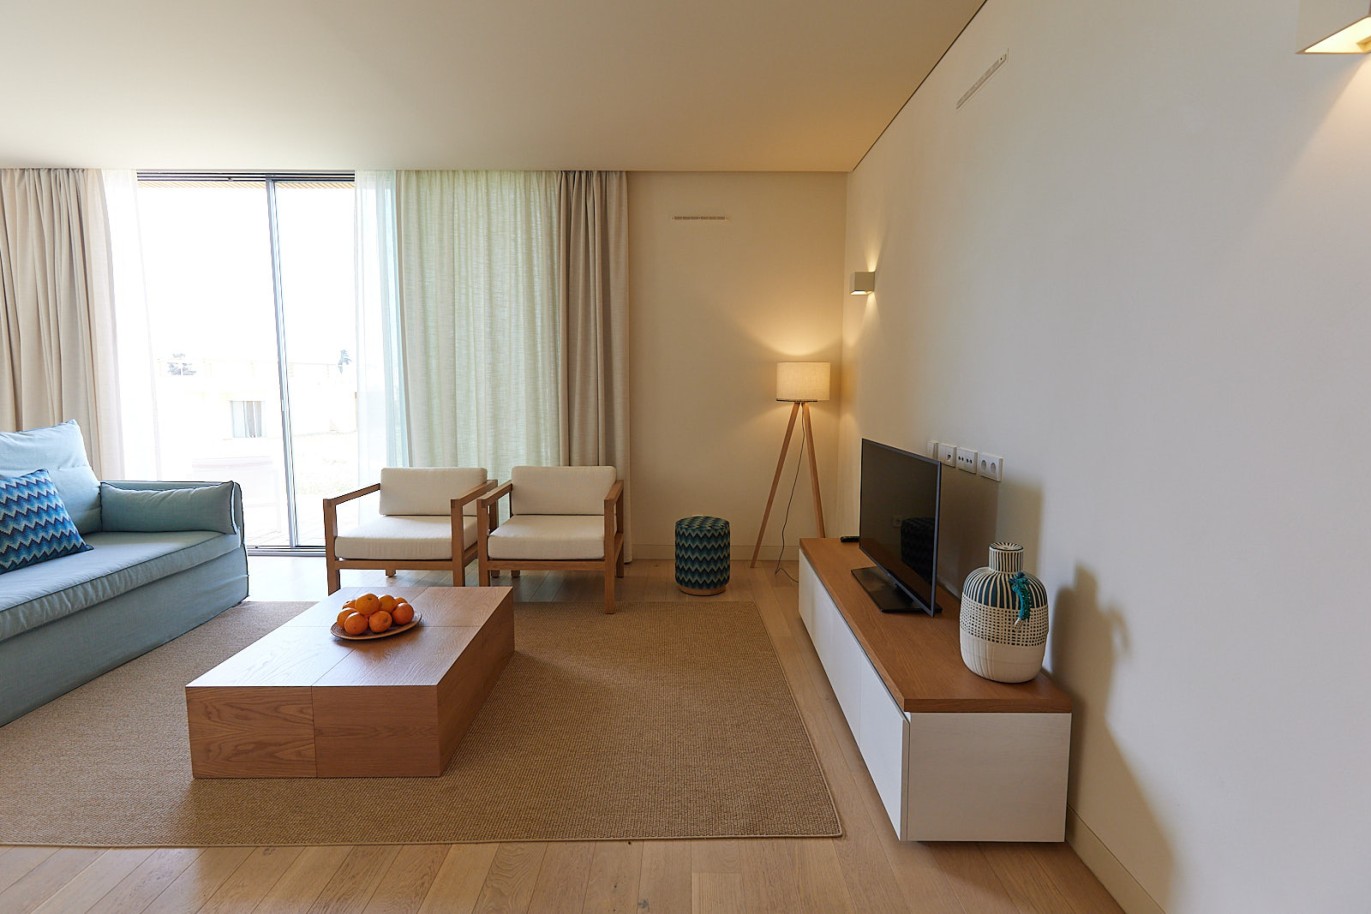 2 bedroom apartment in resort, for sale in Porches, Algarve_228892